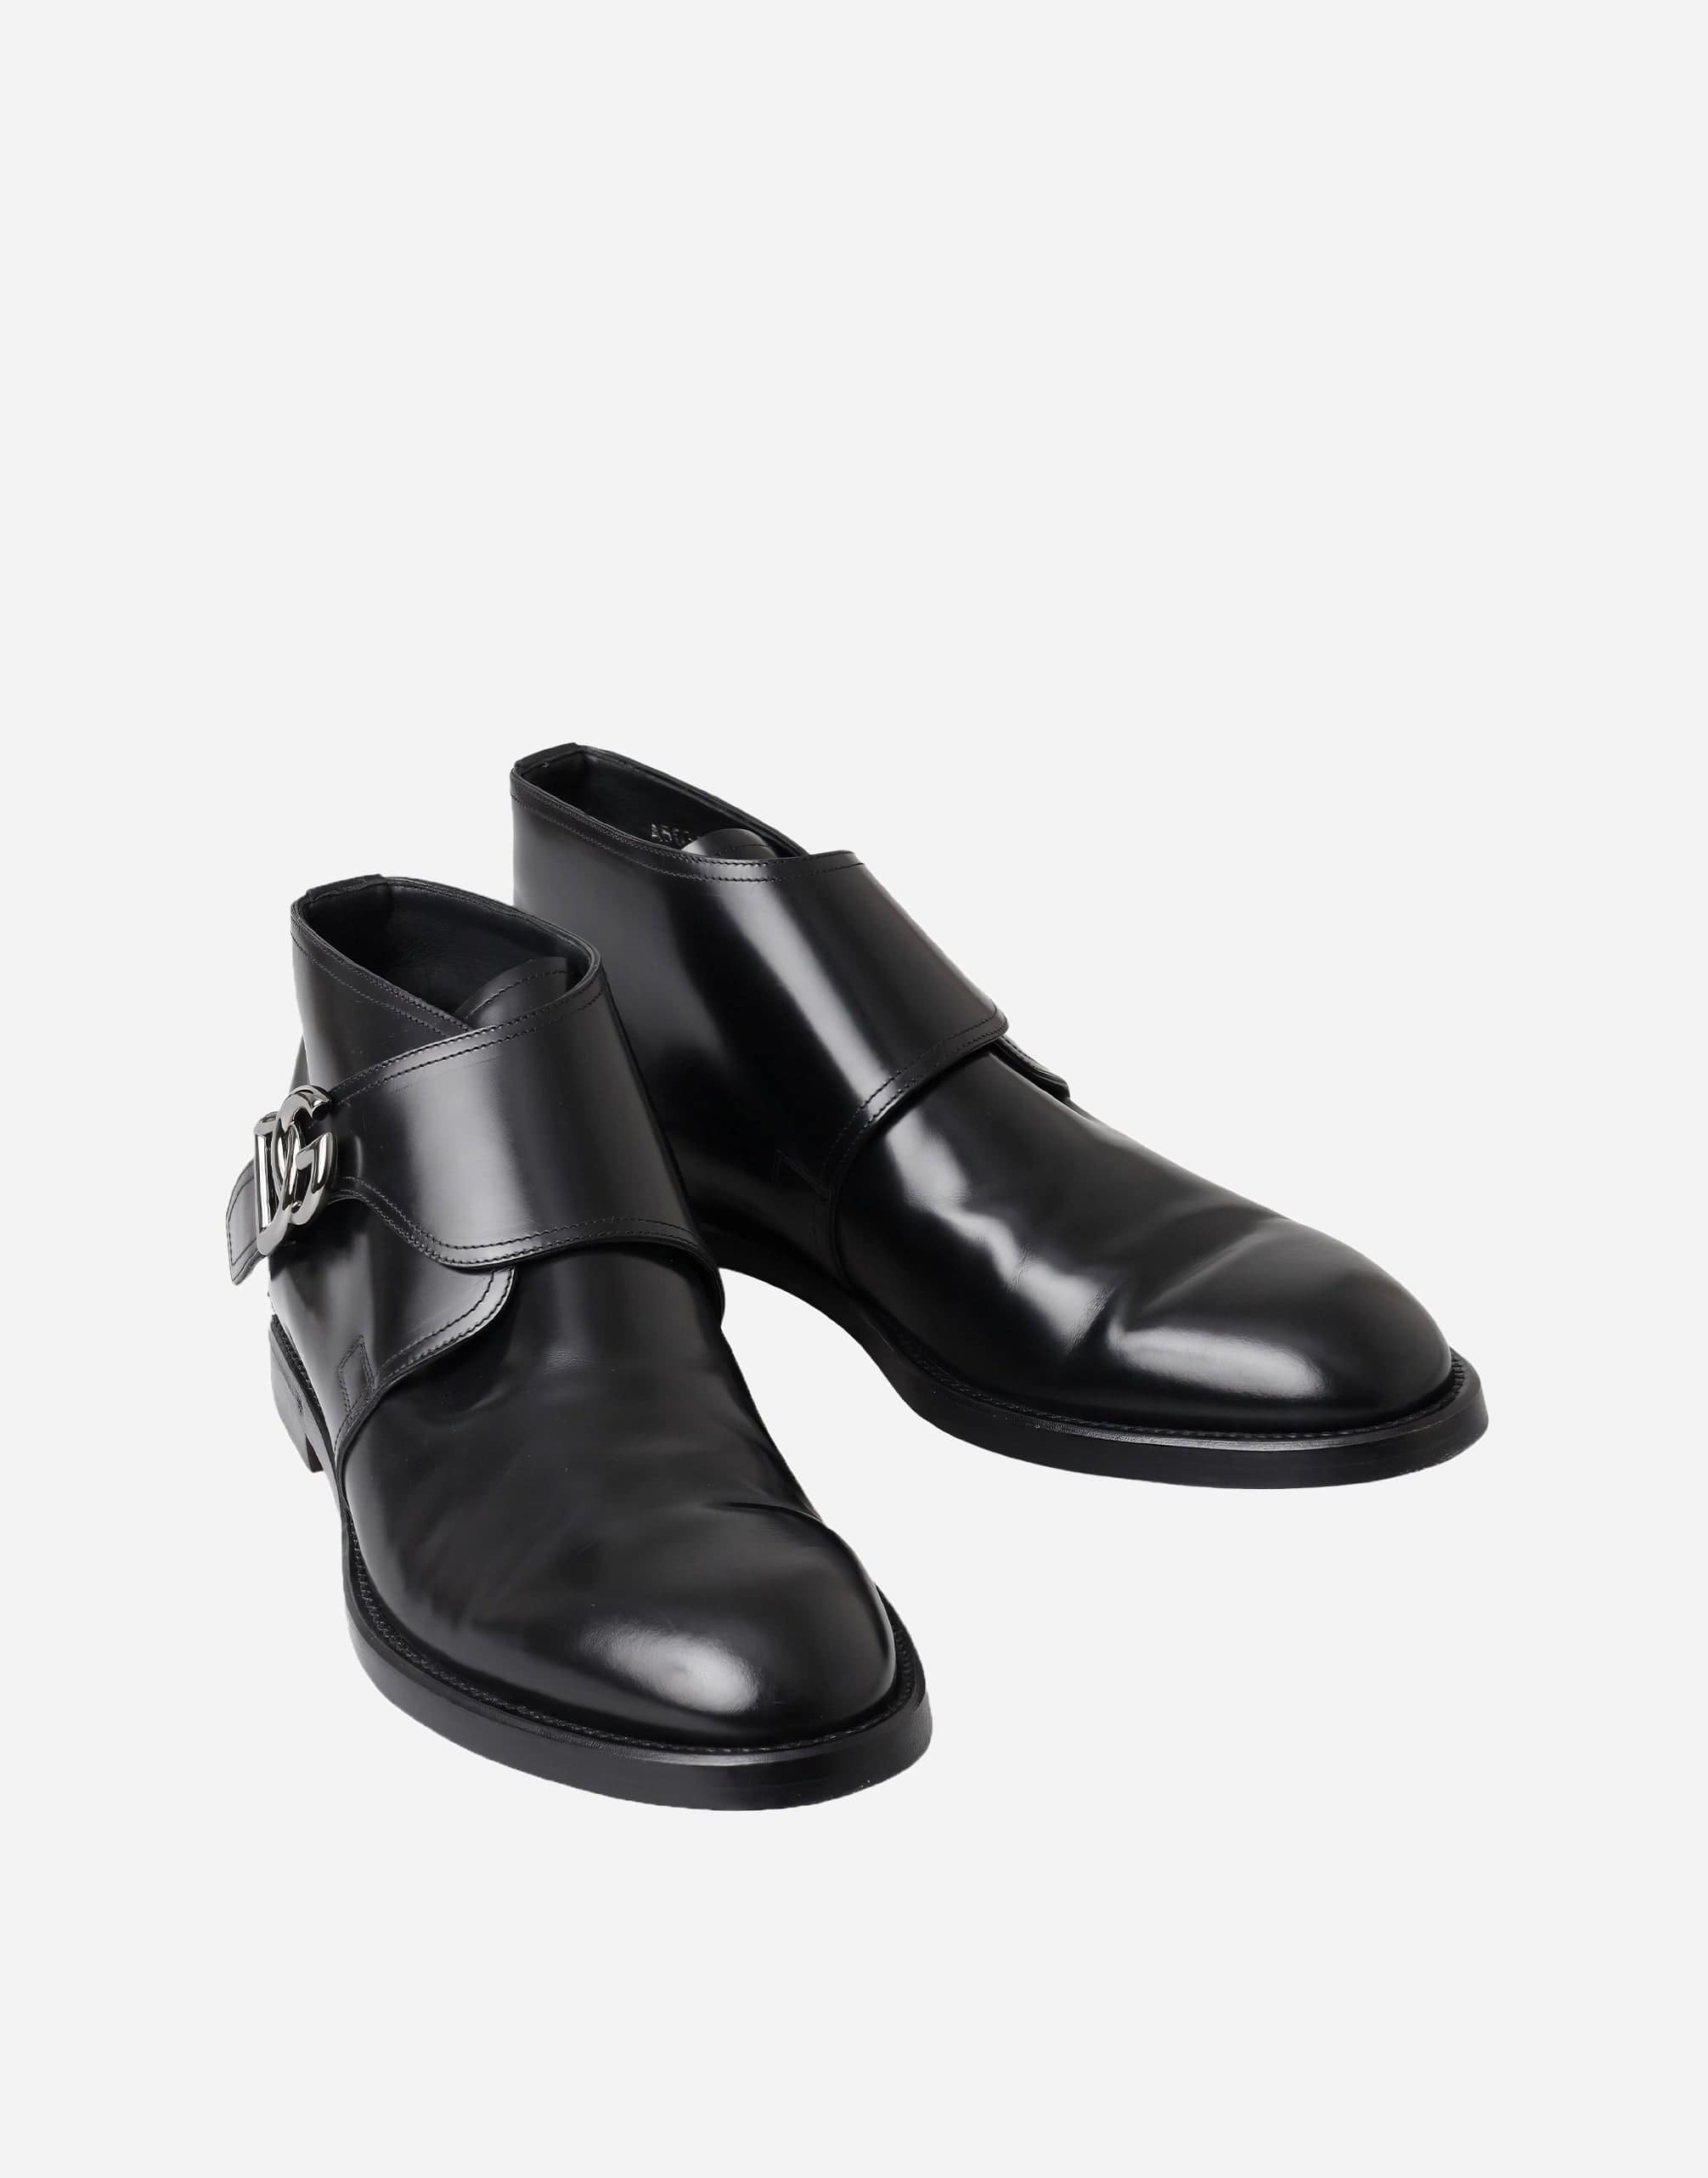 Dolce & Gabbana Black Leather Dress Formal Monk Strap Shoes